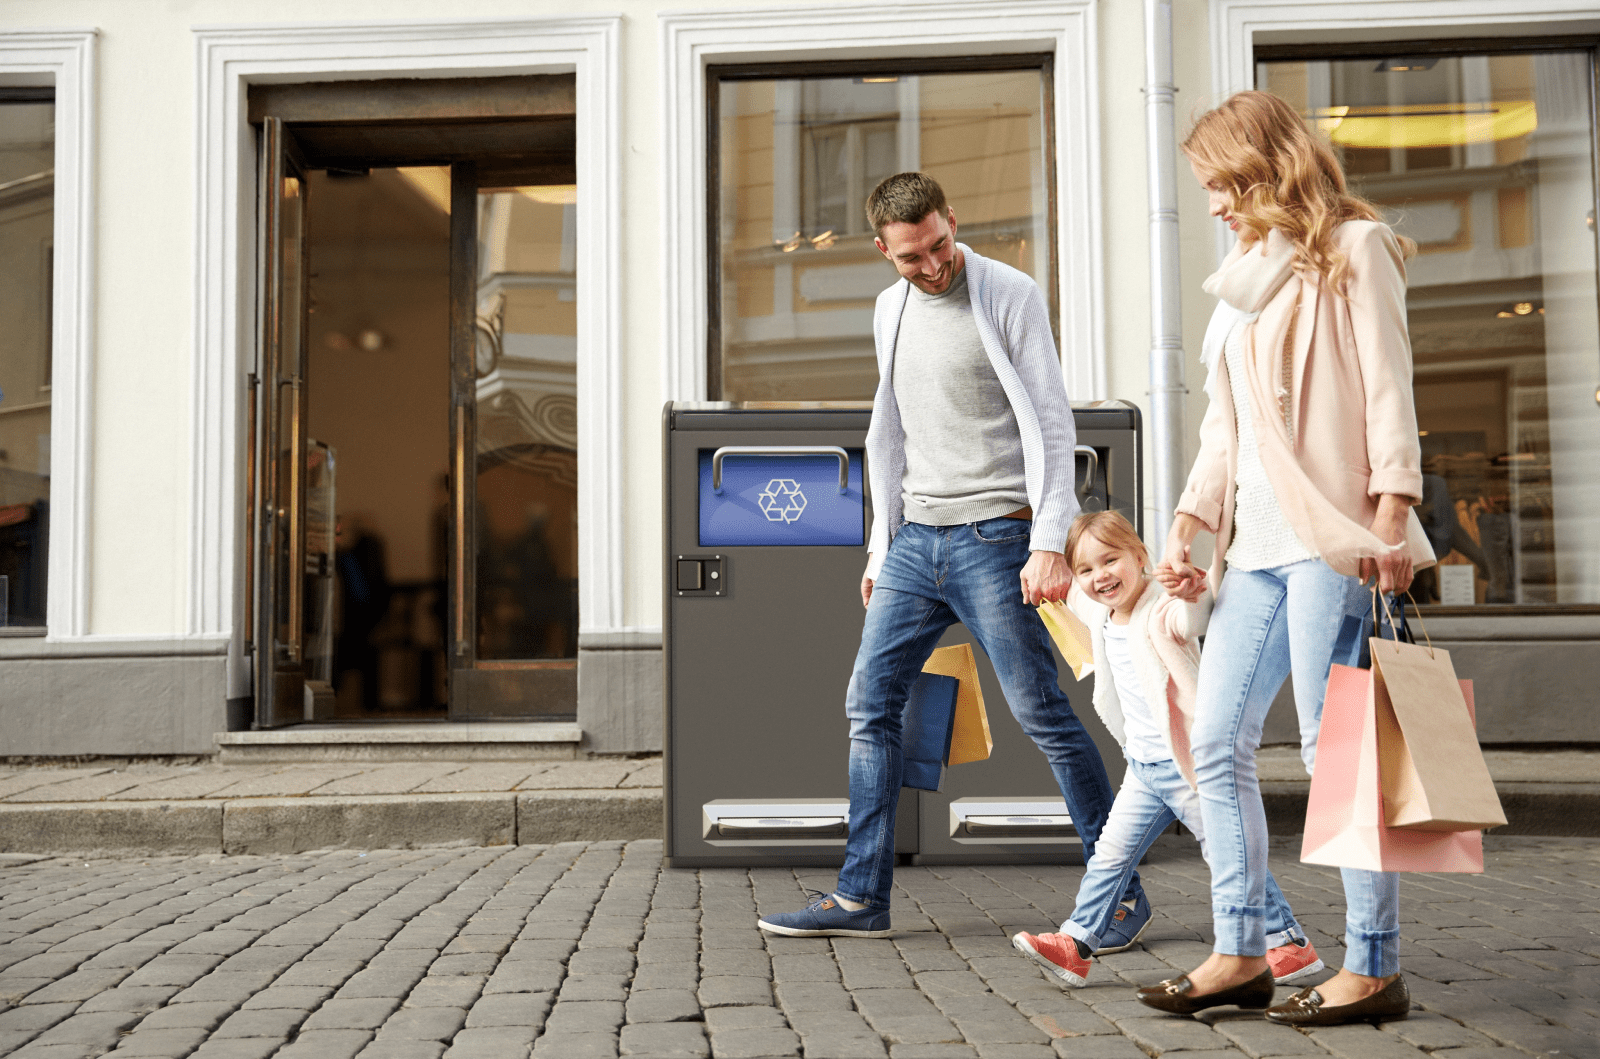 bigbelly recycling bin on public street with family walking by